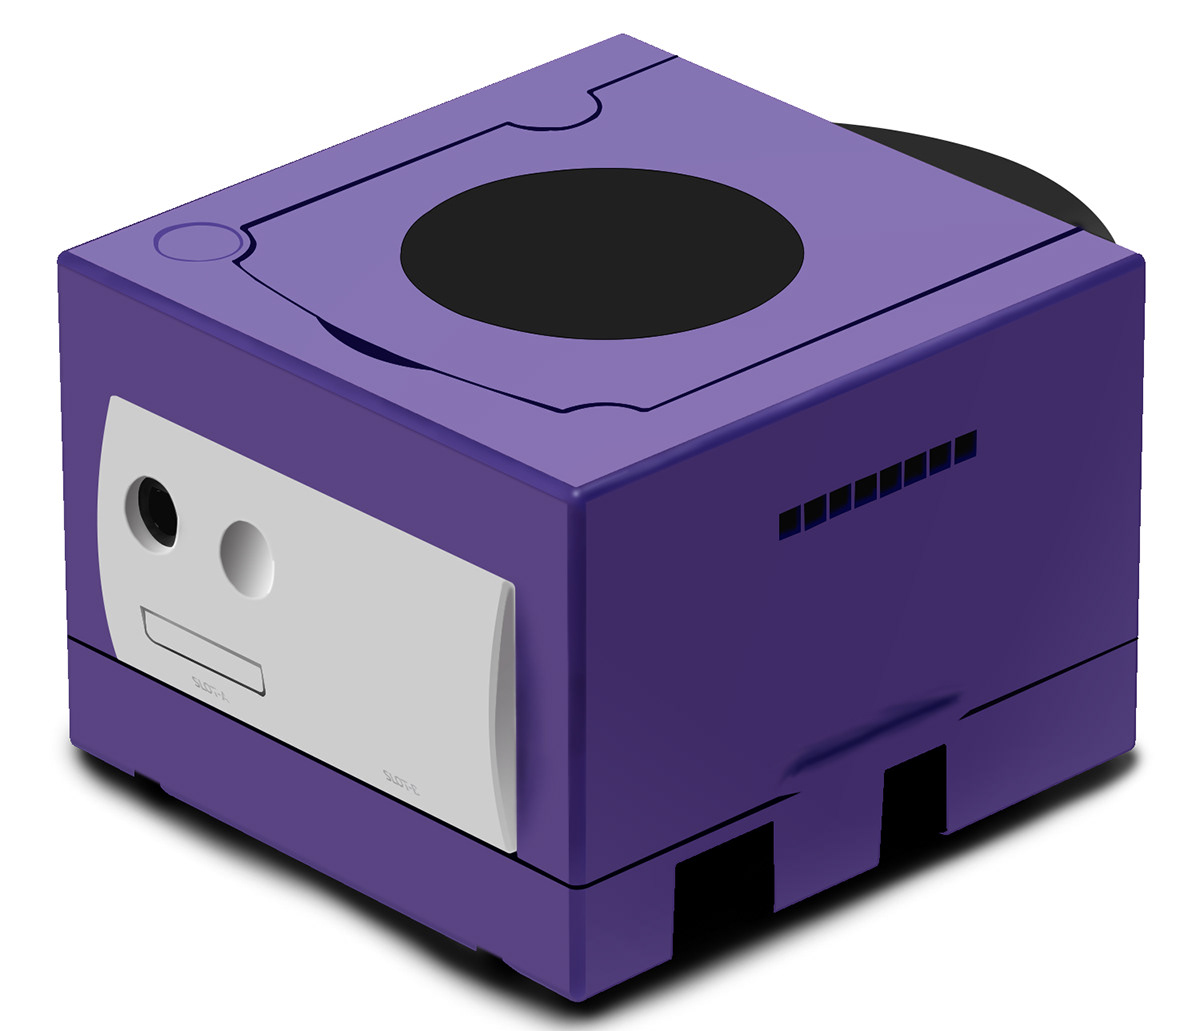 GameCube Nintendo Gaming smashbros wii mario